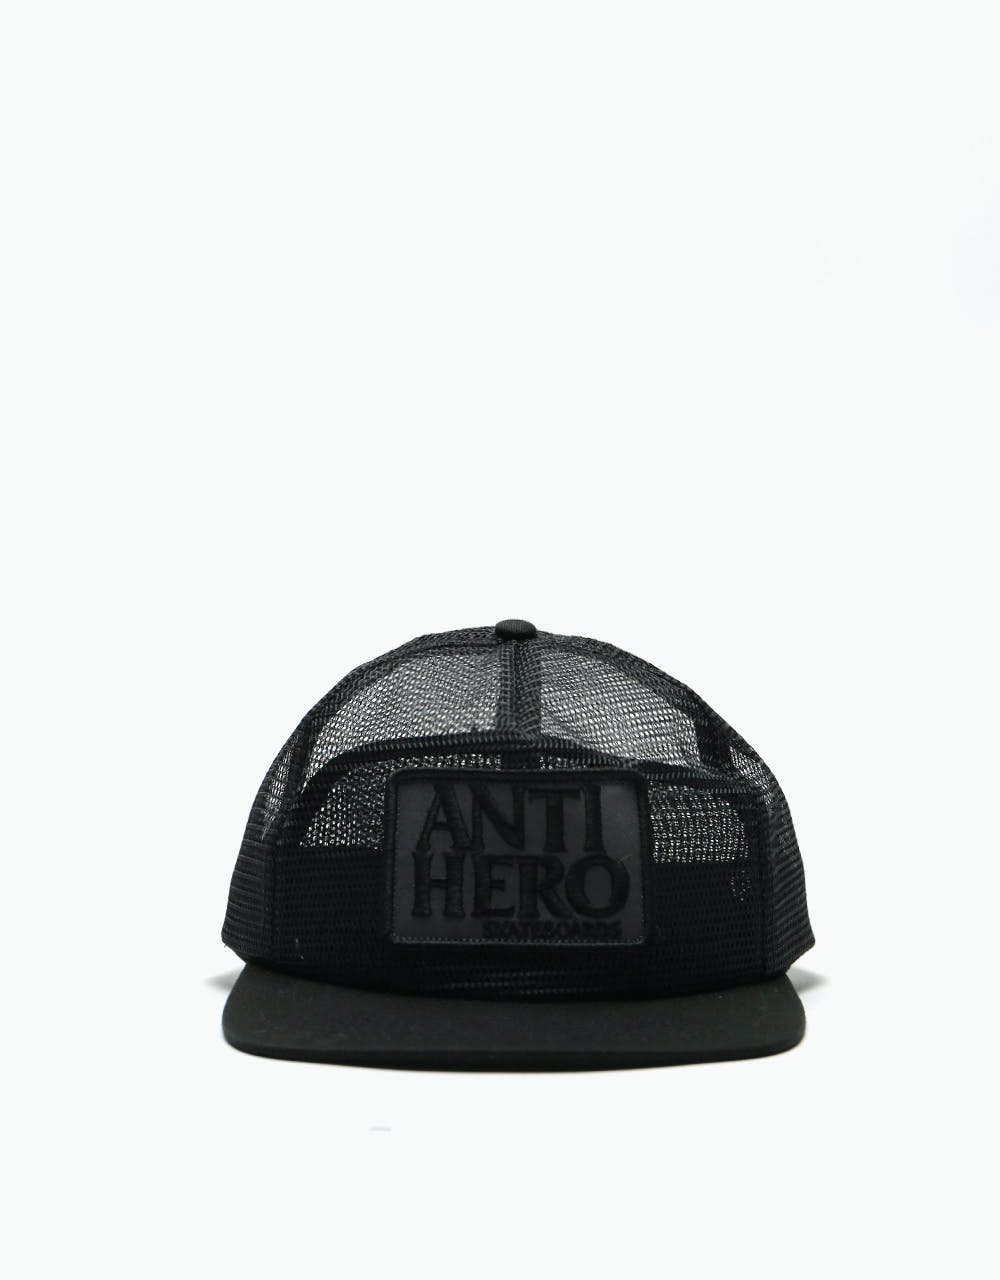 Anti Hero Reserve Patch Mesh Cap - Black